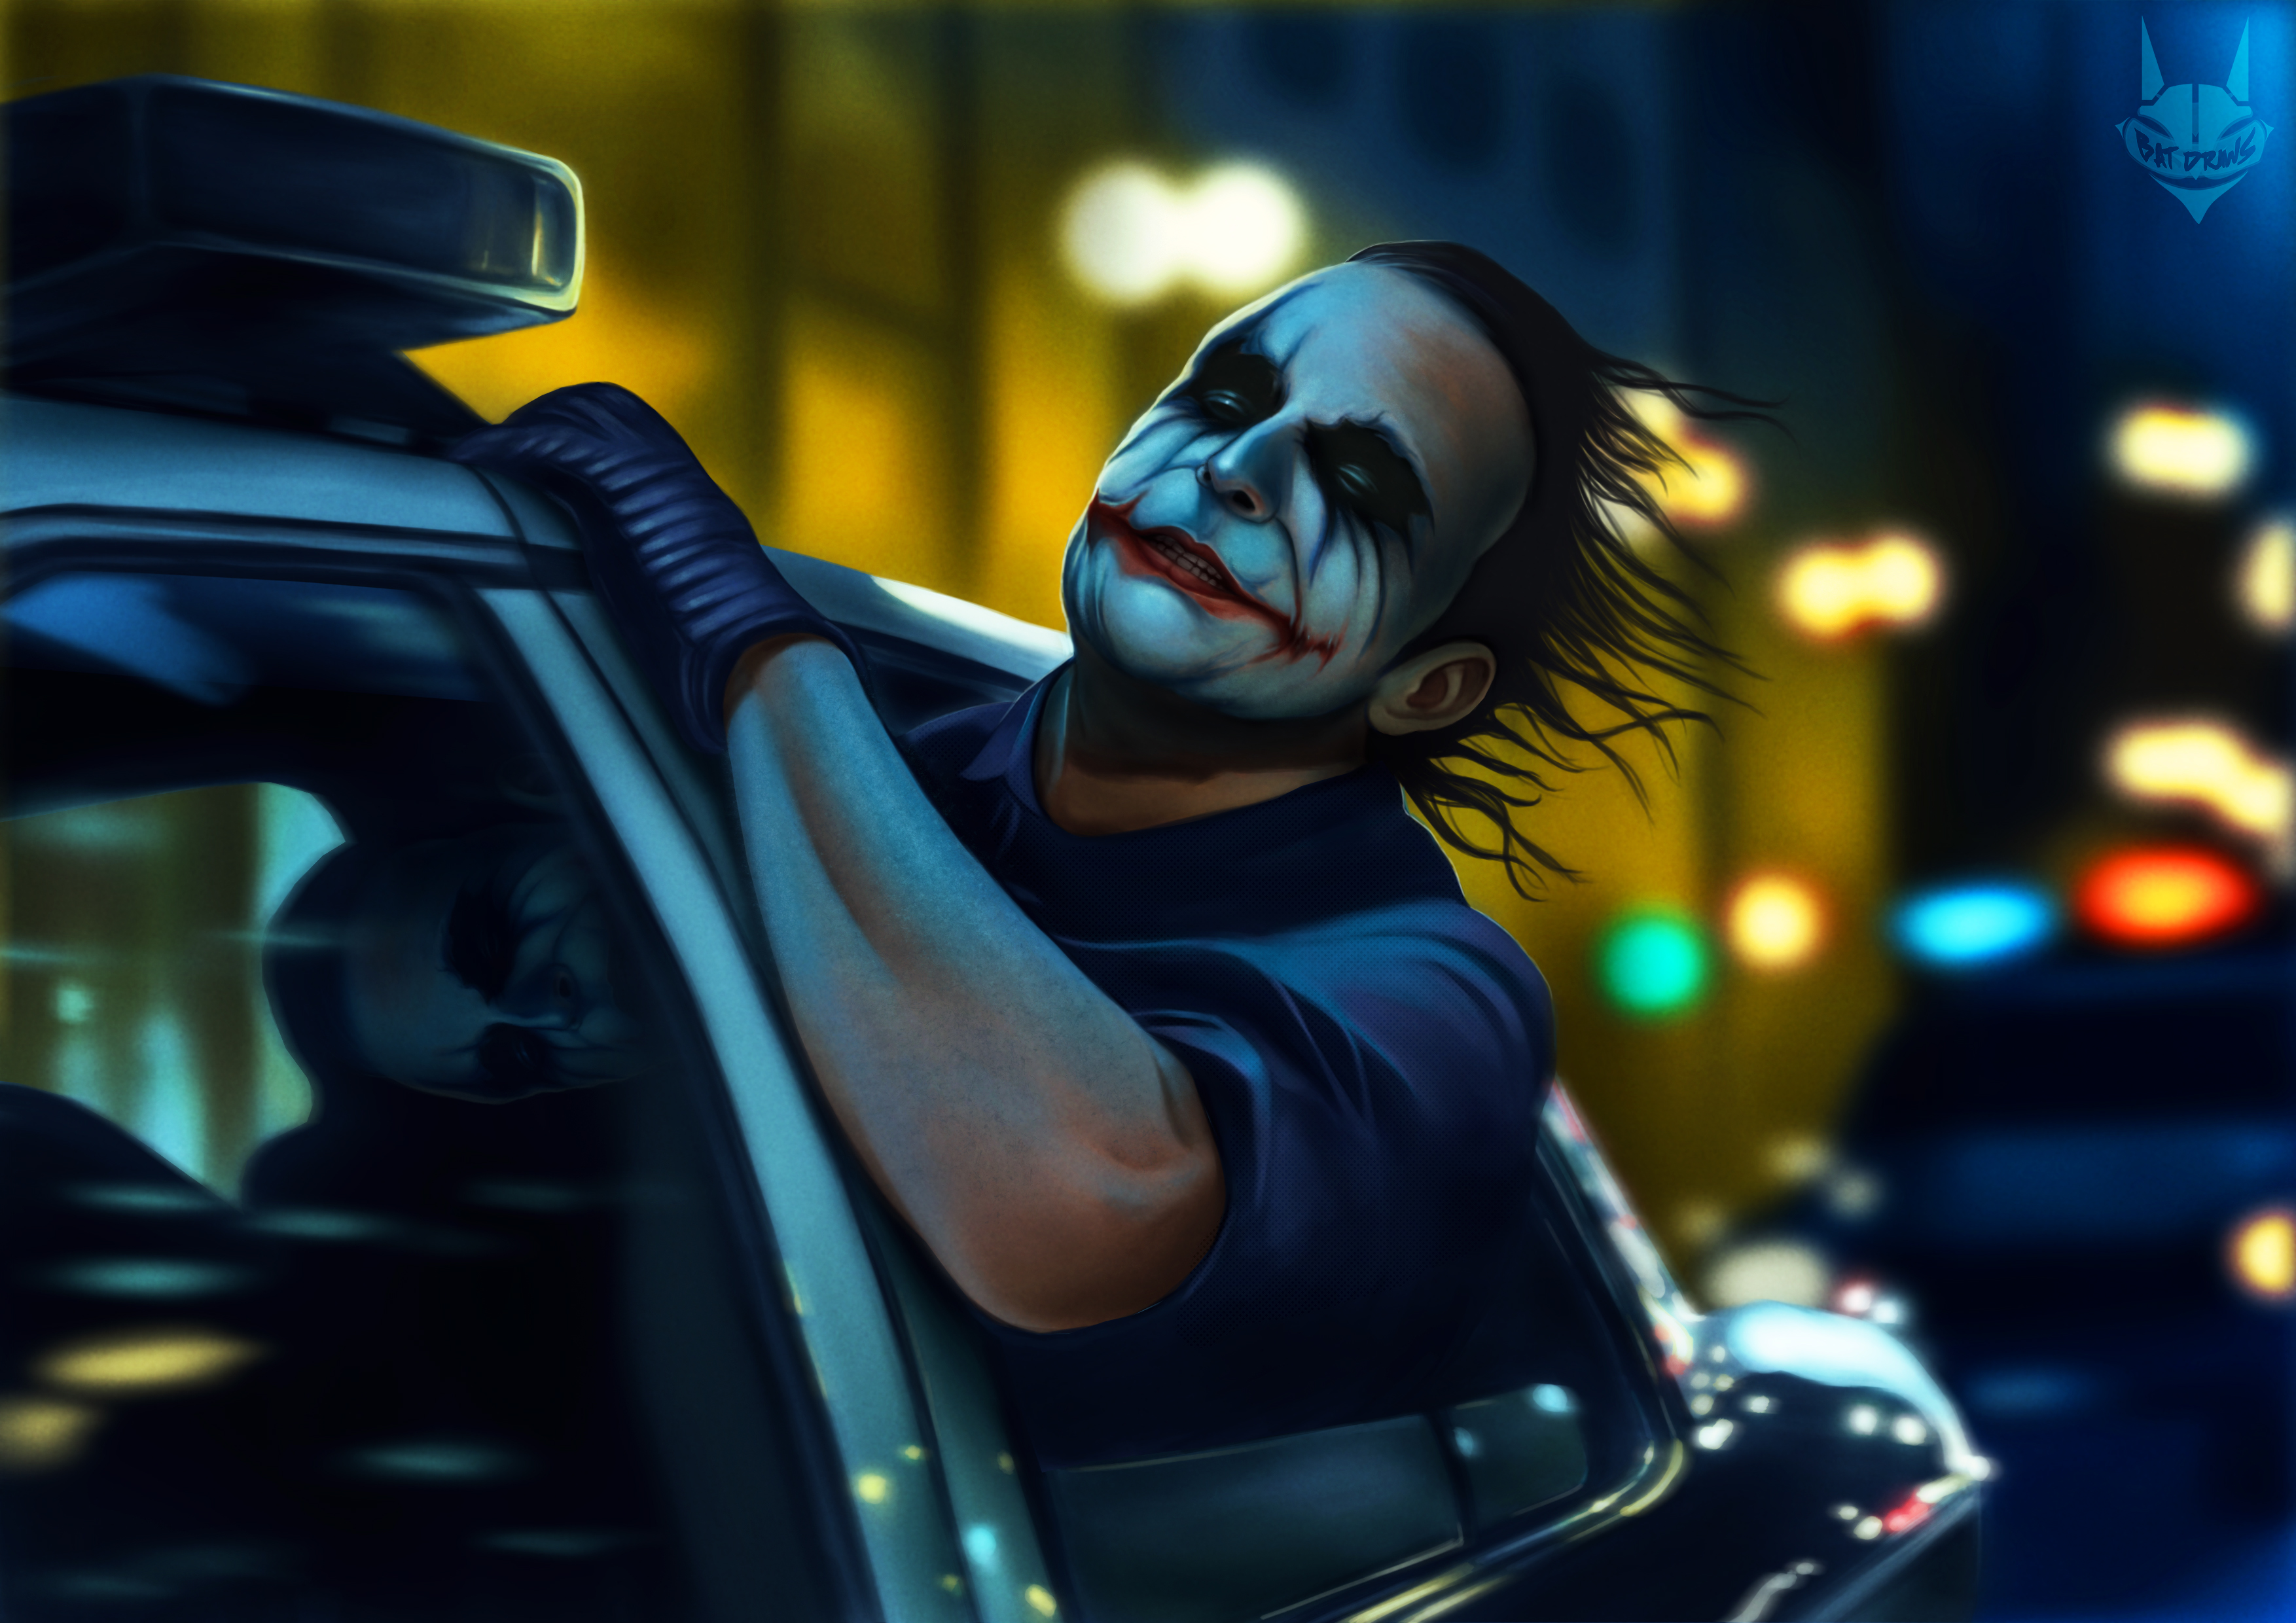 Joker The Dark Knight 4k 2018, HD Superheroes, 4k ...